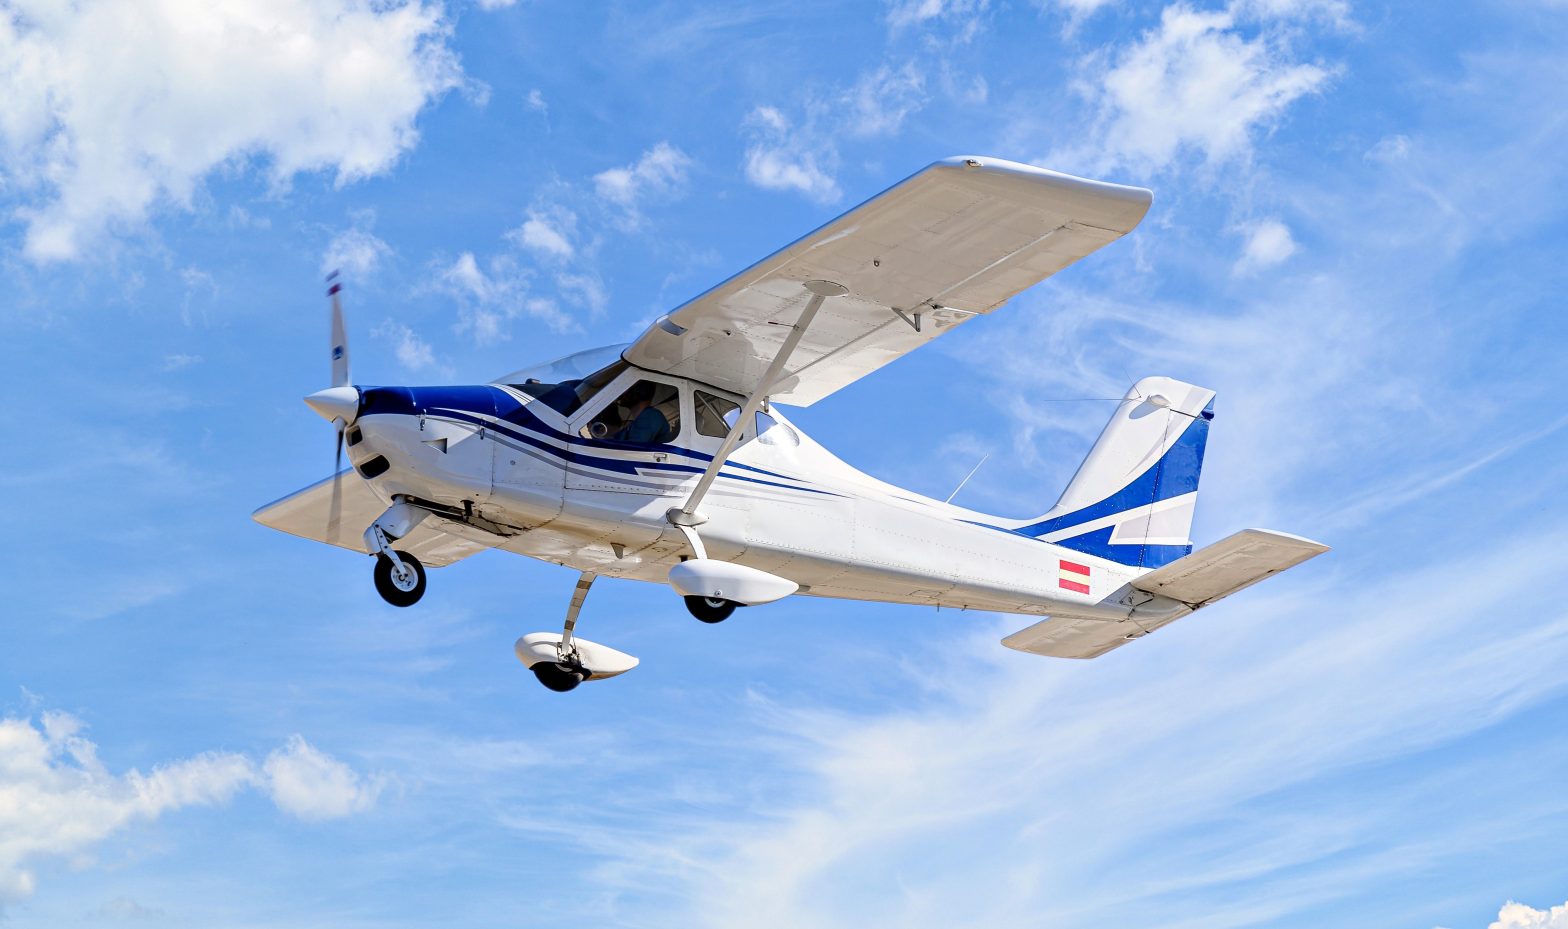 A small plane flying in the blue sky. News - Trevor Daniel Jacob sentencing